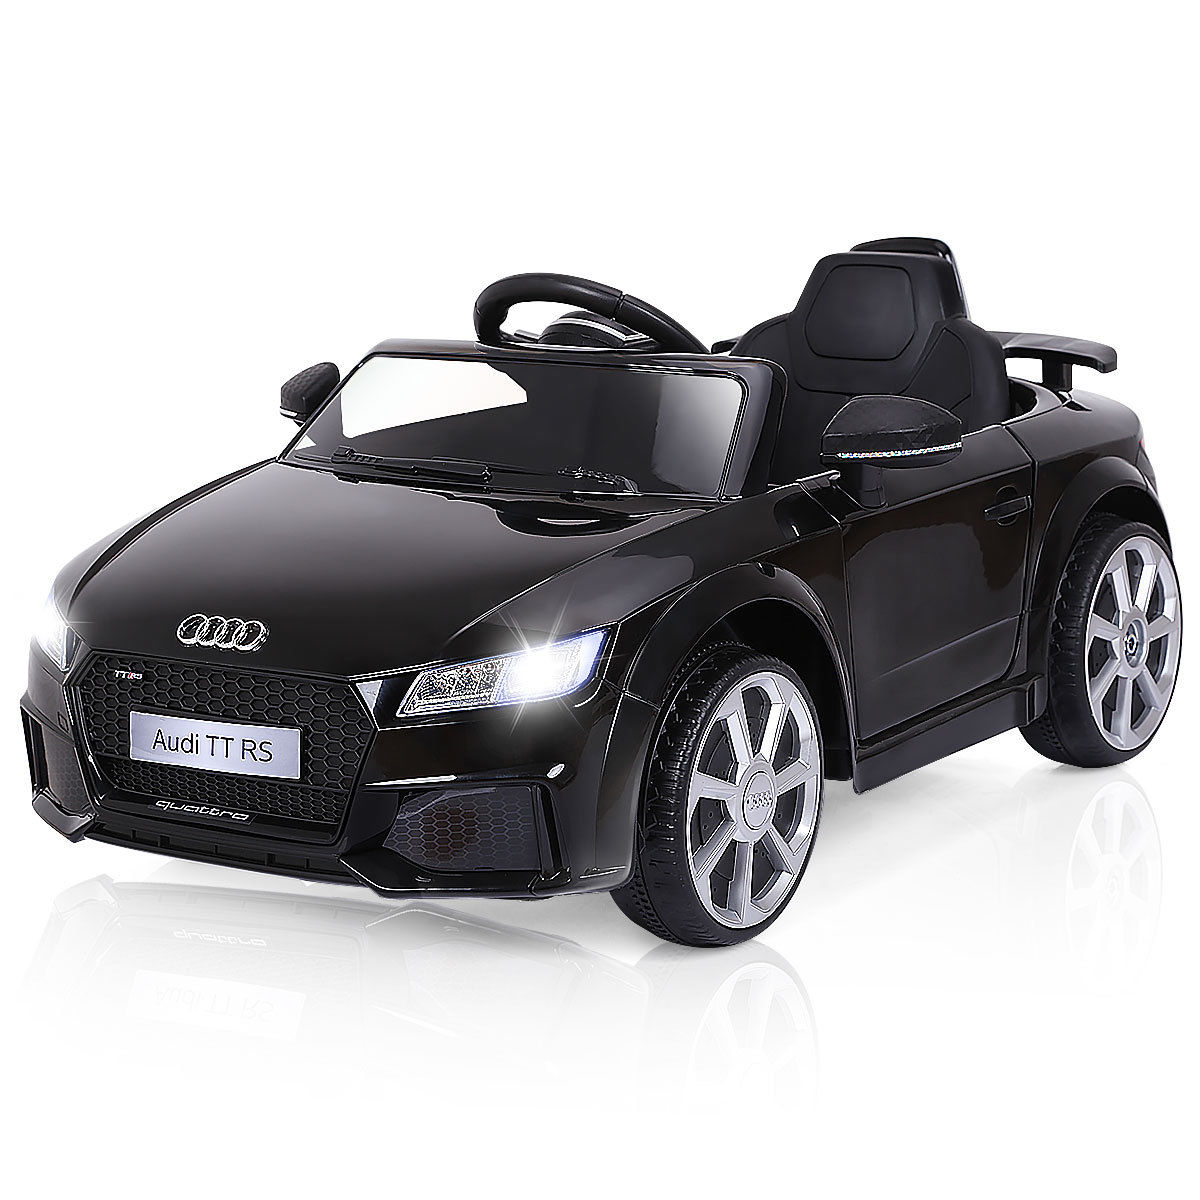 12V Audi TT RS Electric Kids Ride On Car Licensed Remote Control MP3 - White